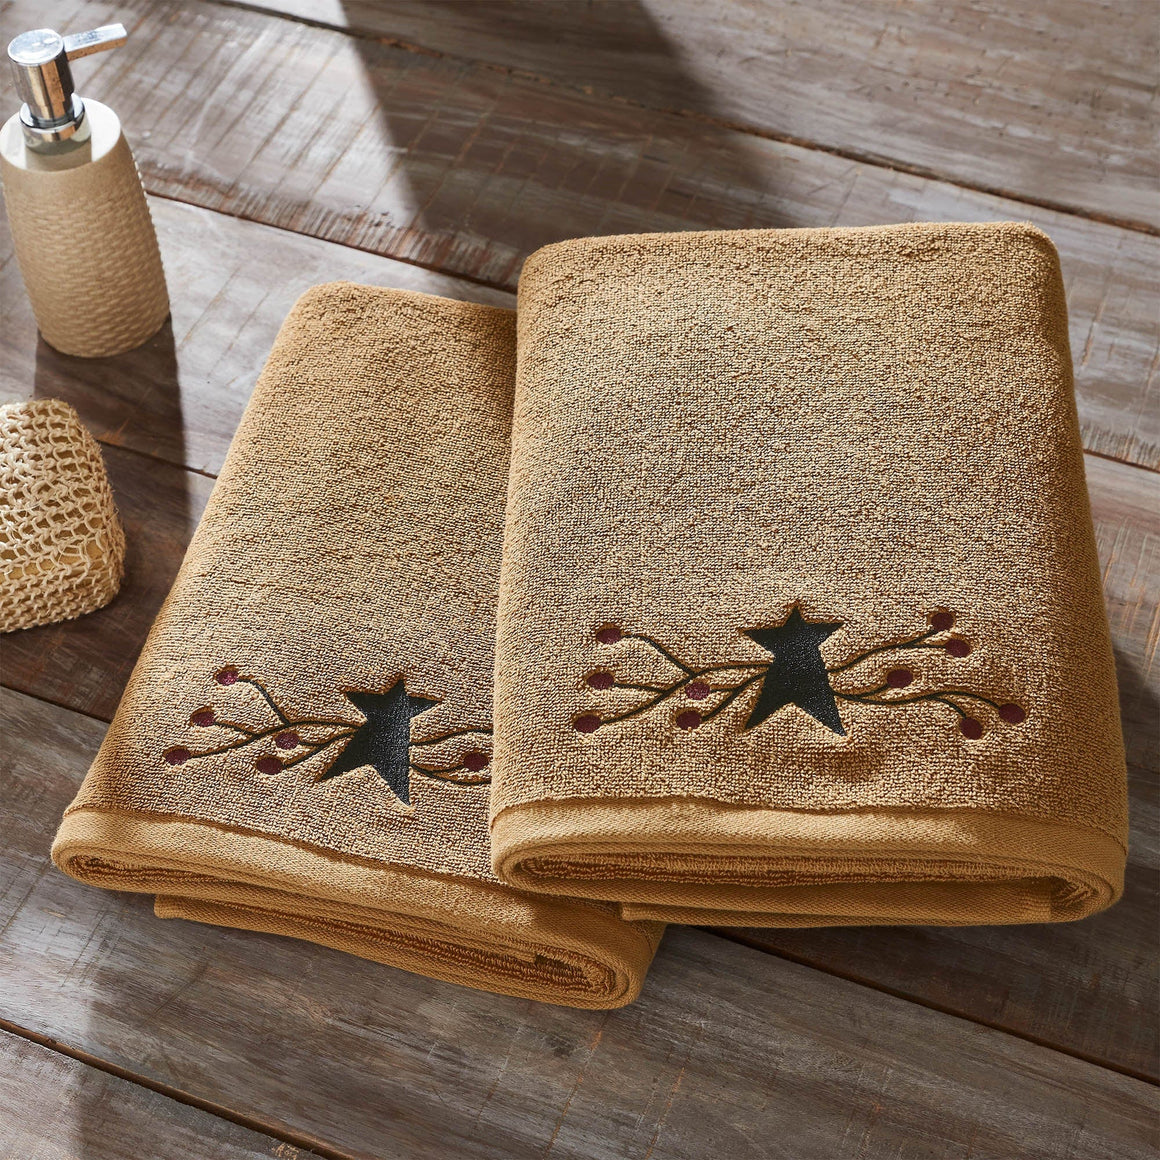 Pip Vinestar Embroidered Bath Towel Set of 2